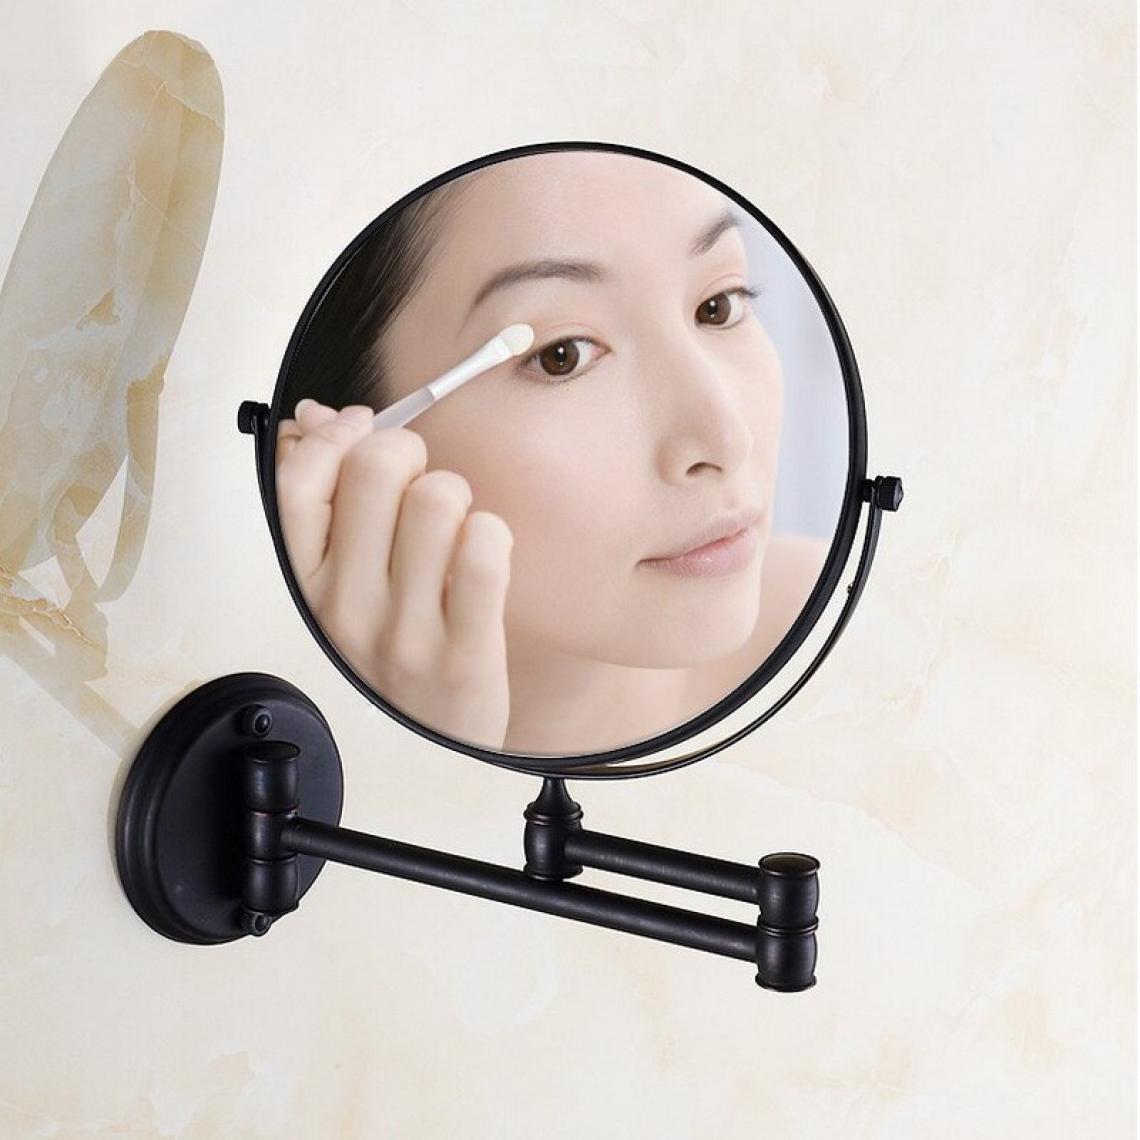 Universal - Miroir de toilette en bronze noir, miroir de toilette en cuivre, miroir de maquillage pliant, miroir double face, miroir de maquillage.(Le noir) - Miroir de salle de bain